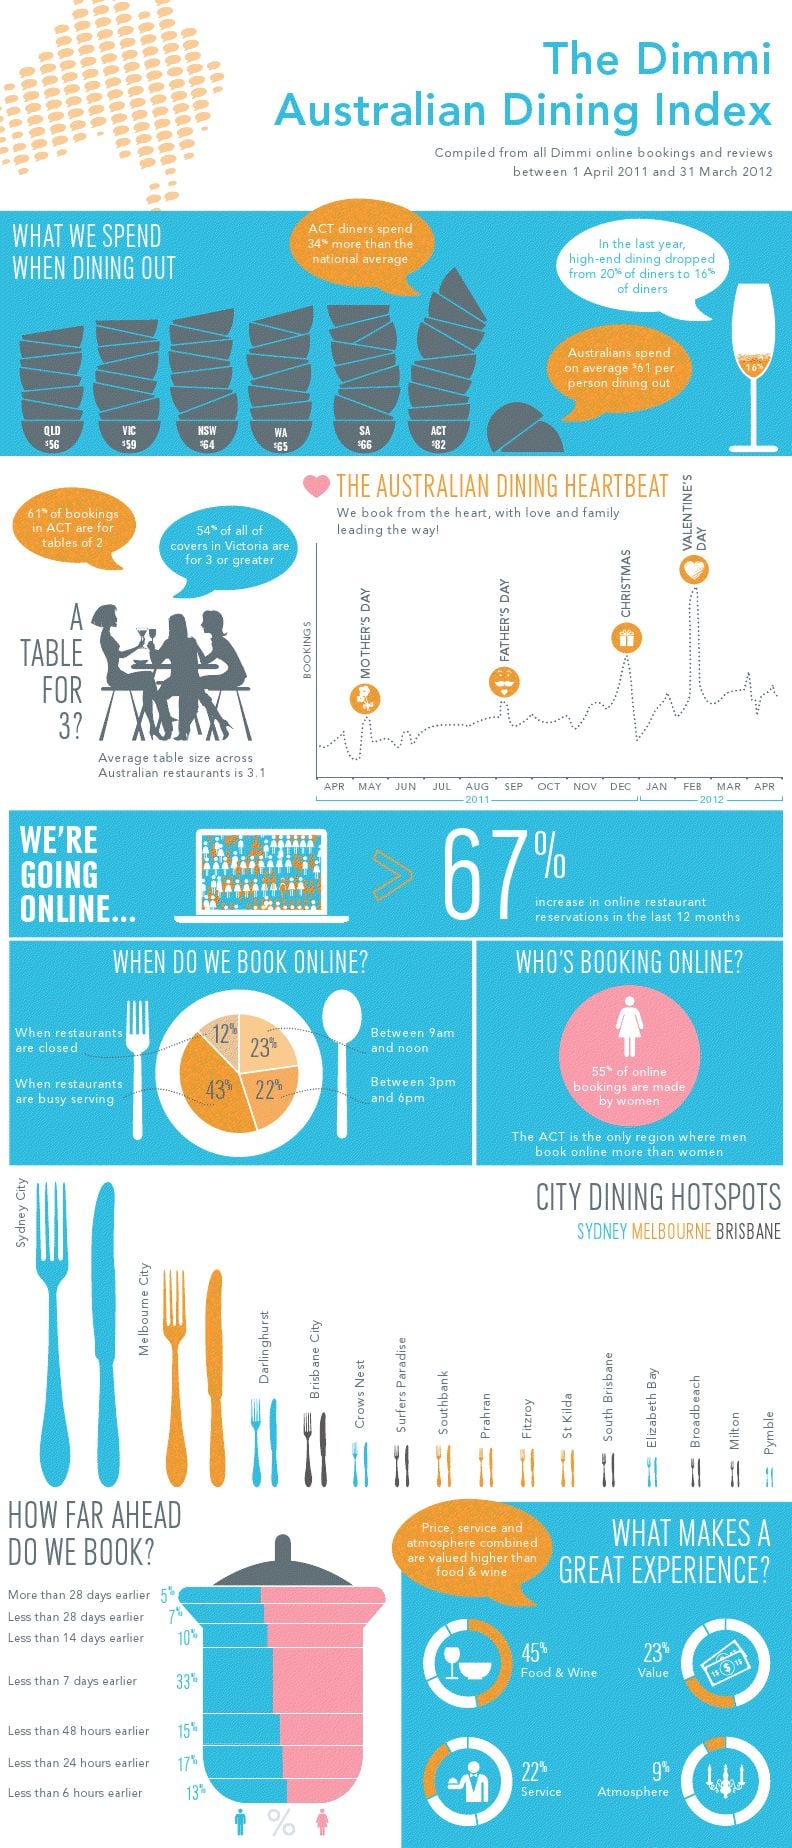 Australian Dining Index, Dimmi